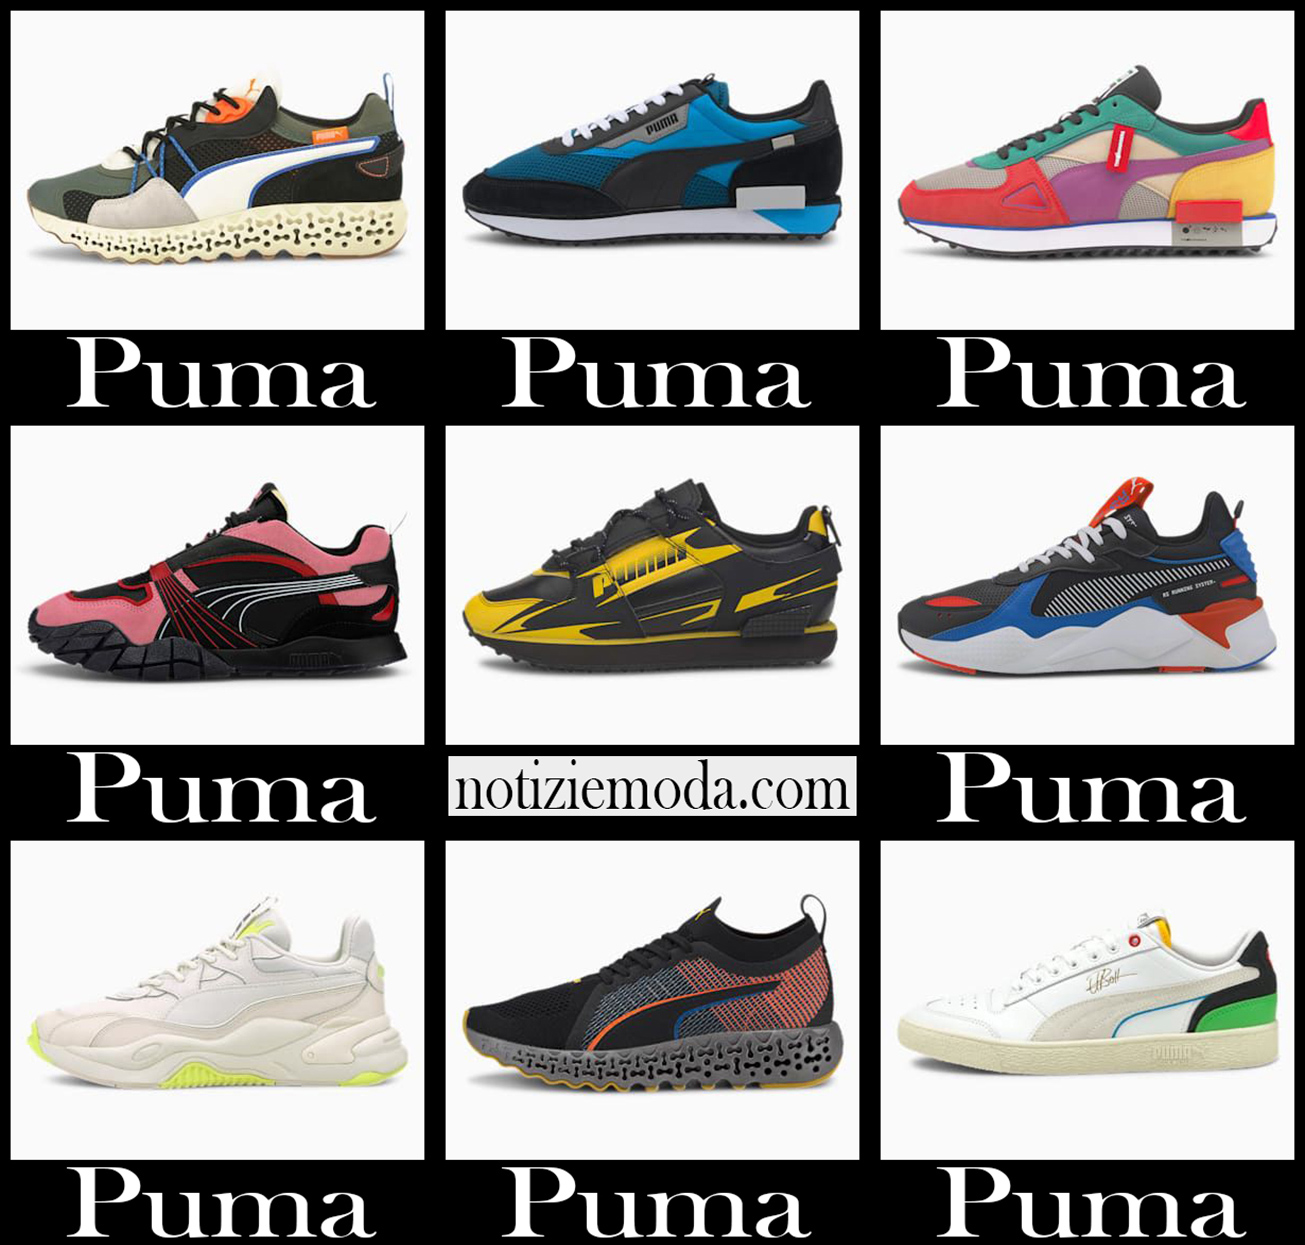 Nuovi arrivi sneakers Puma 2021 calzature moda donna